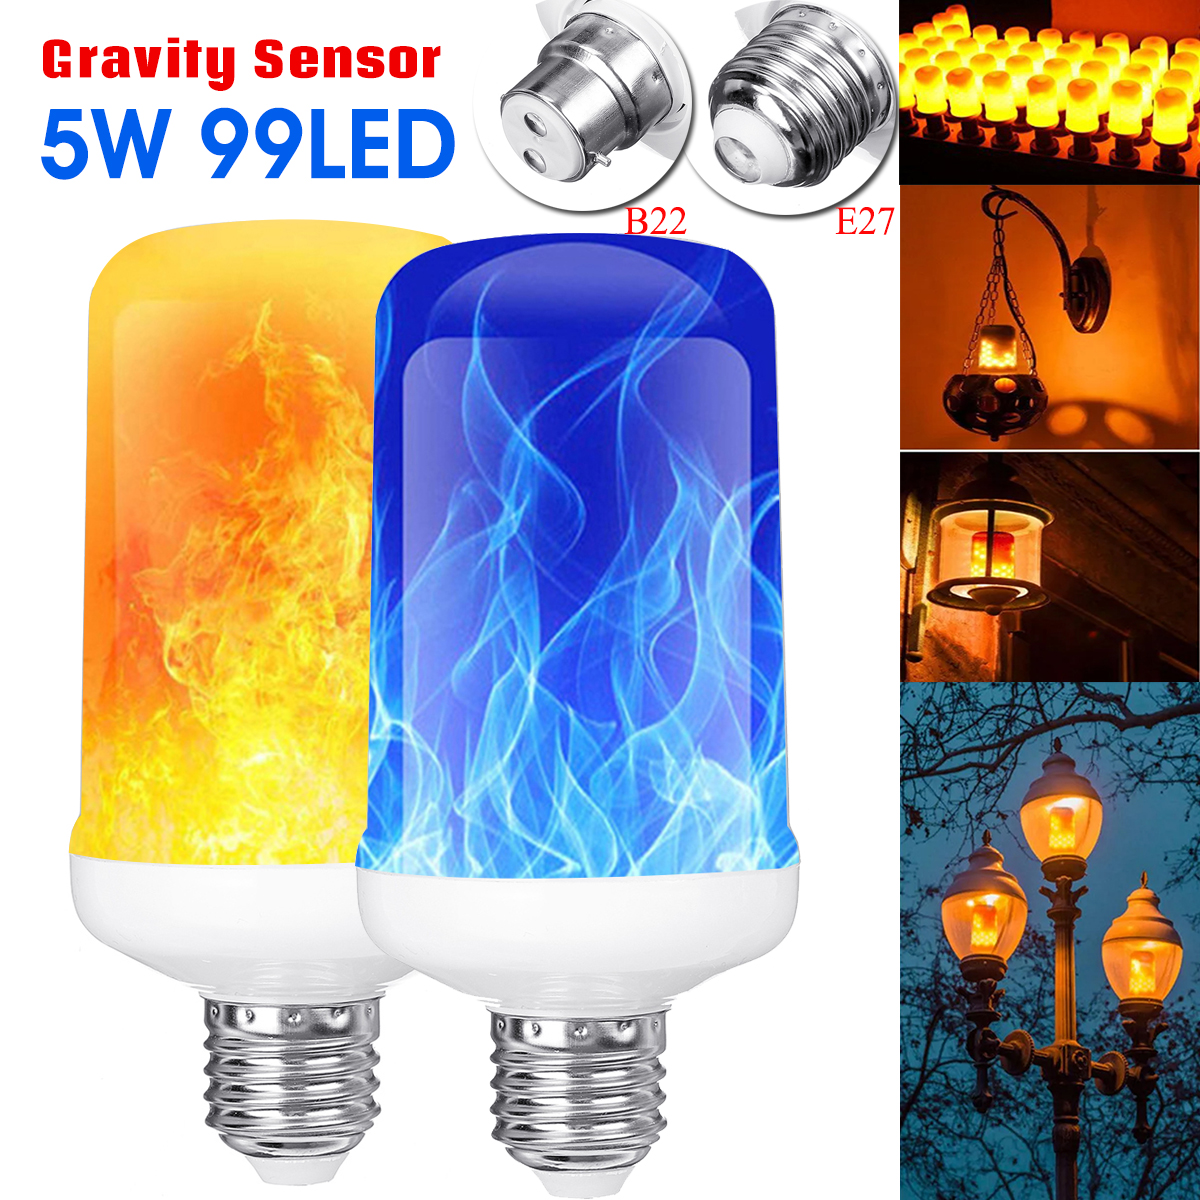 4-Modes-Gravity-Sensor-B22-E27-Flame-Effect-Fire-Light-Bulb-Super-Bright-96-LEDs-Decorative-Atmosphe-1693493-1